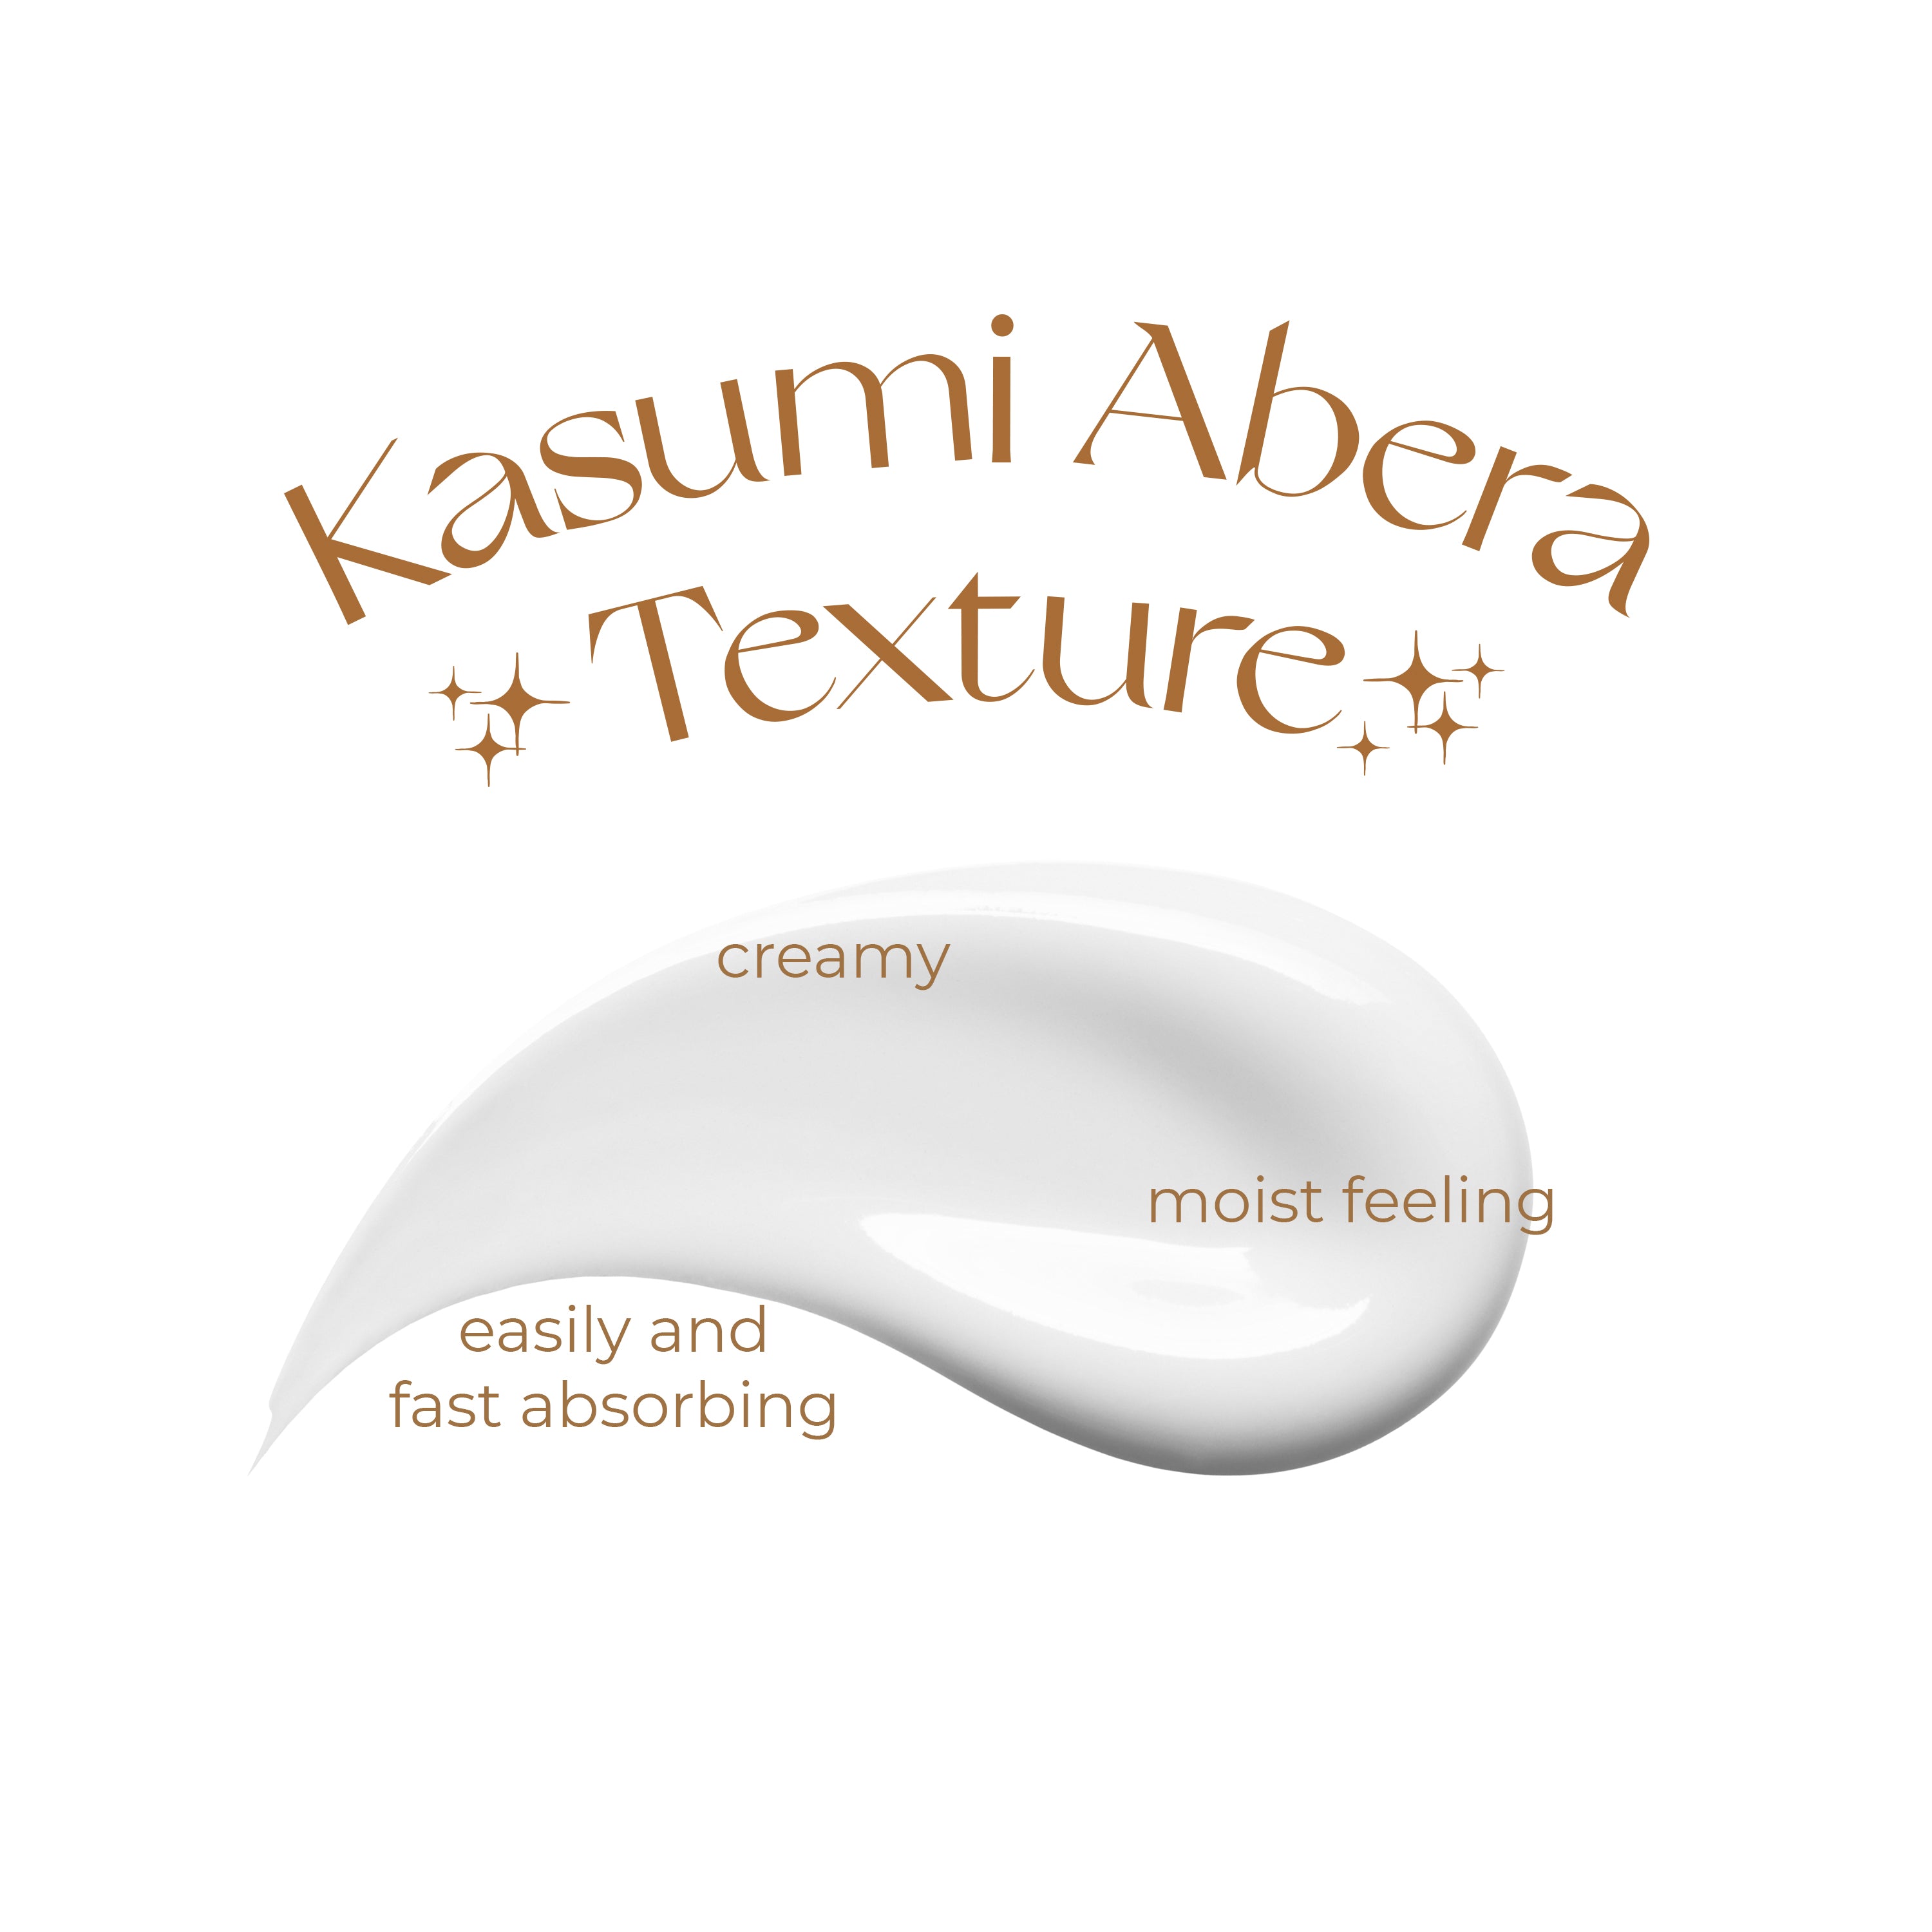 Kasumi Abera Whitening Cream - LTT